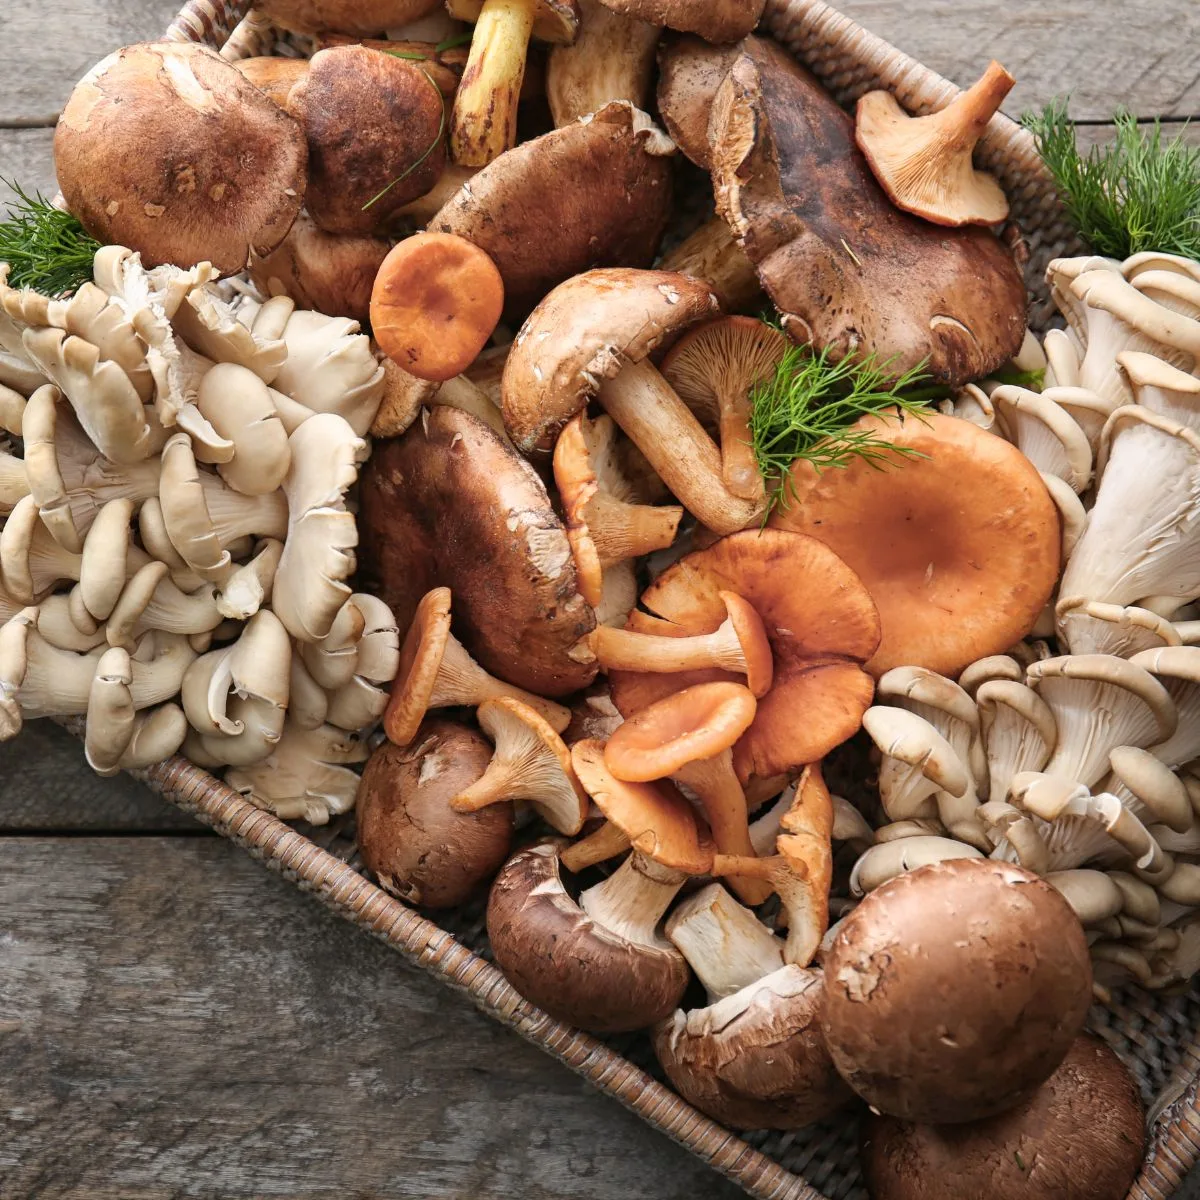 why do mushrooms make you gassy